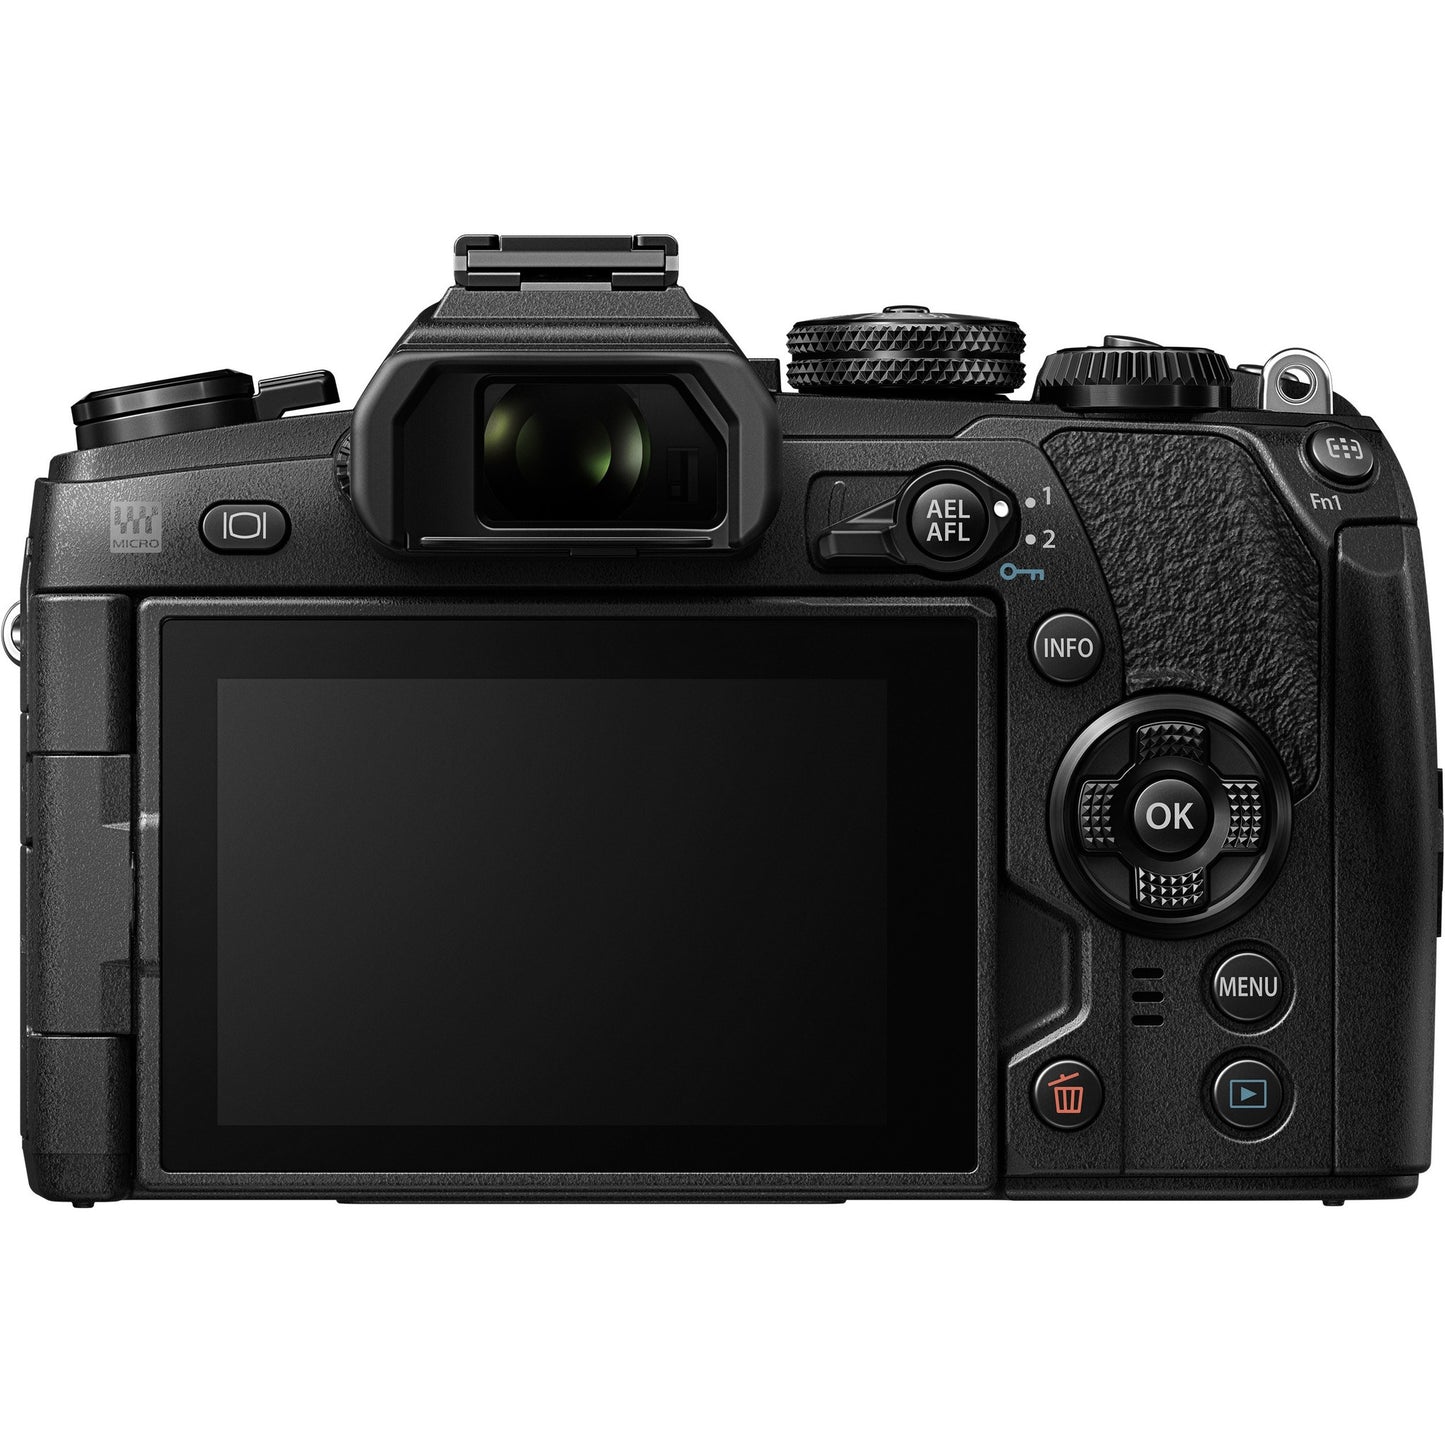 Olympus OM-D E-M1 Mark II 20.4 Megapixel Mirrorless Camera Body Only - Black